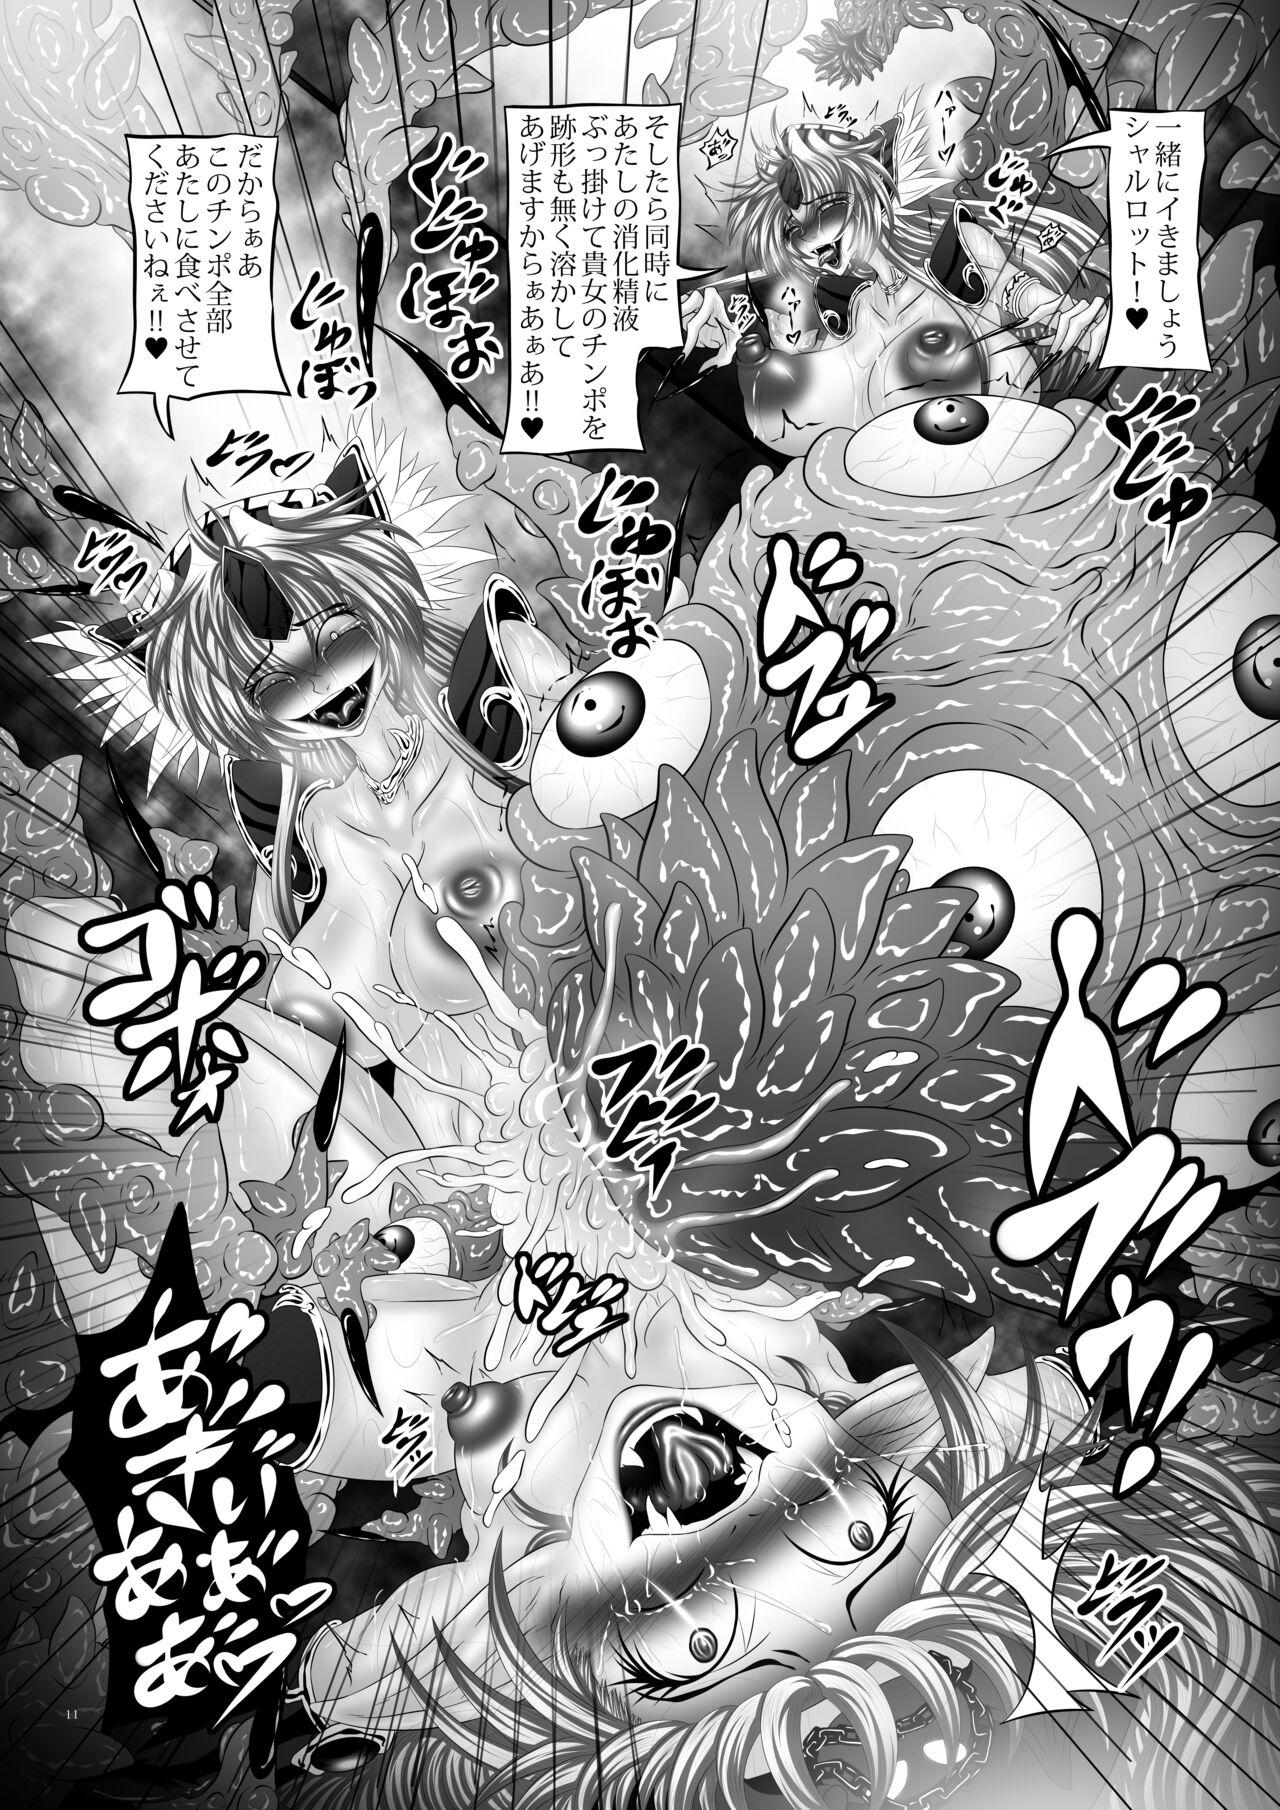 Bigtits Dragon' s Fall V - Seiken densetsu 3 Cartoon - Page 10